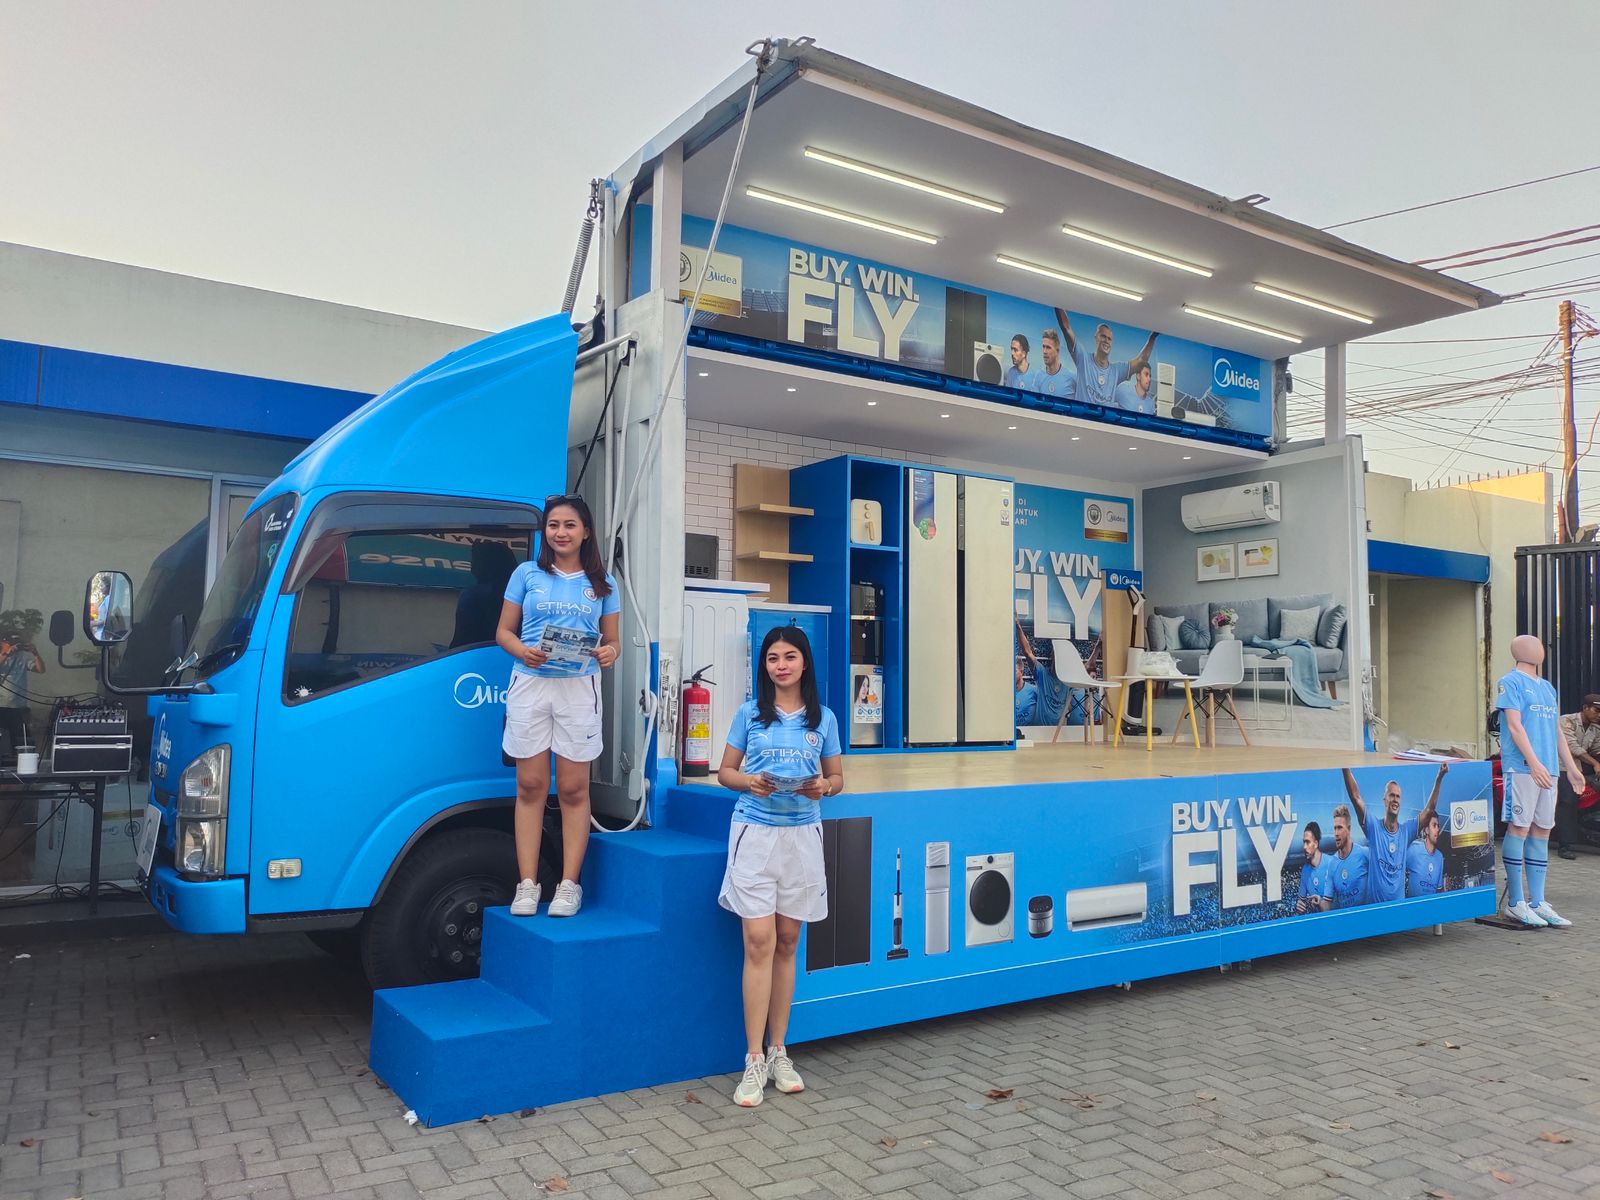 Lanjutkan Kerjasama dengan Manchester City, Midea Siapkan Roadshow Caravan Buy Win Fly di 6 Kota